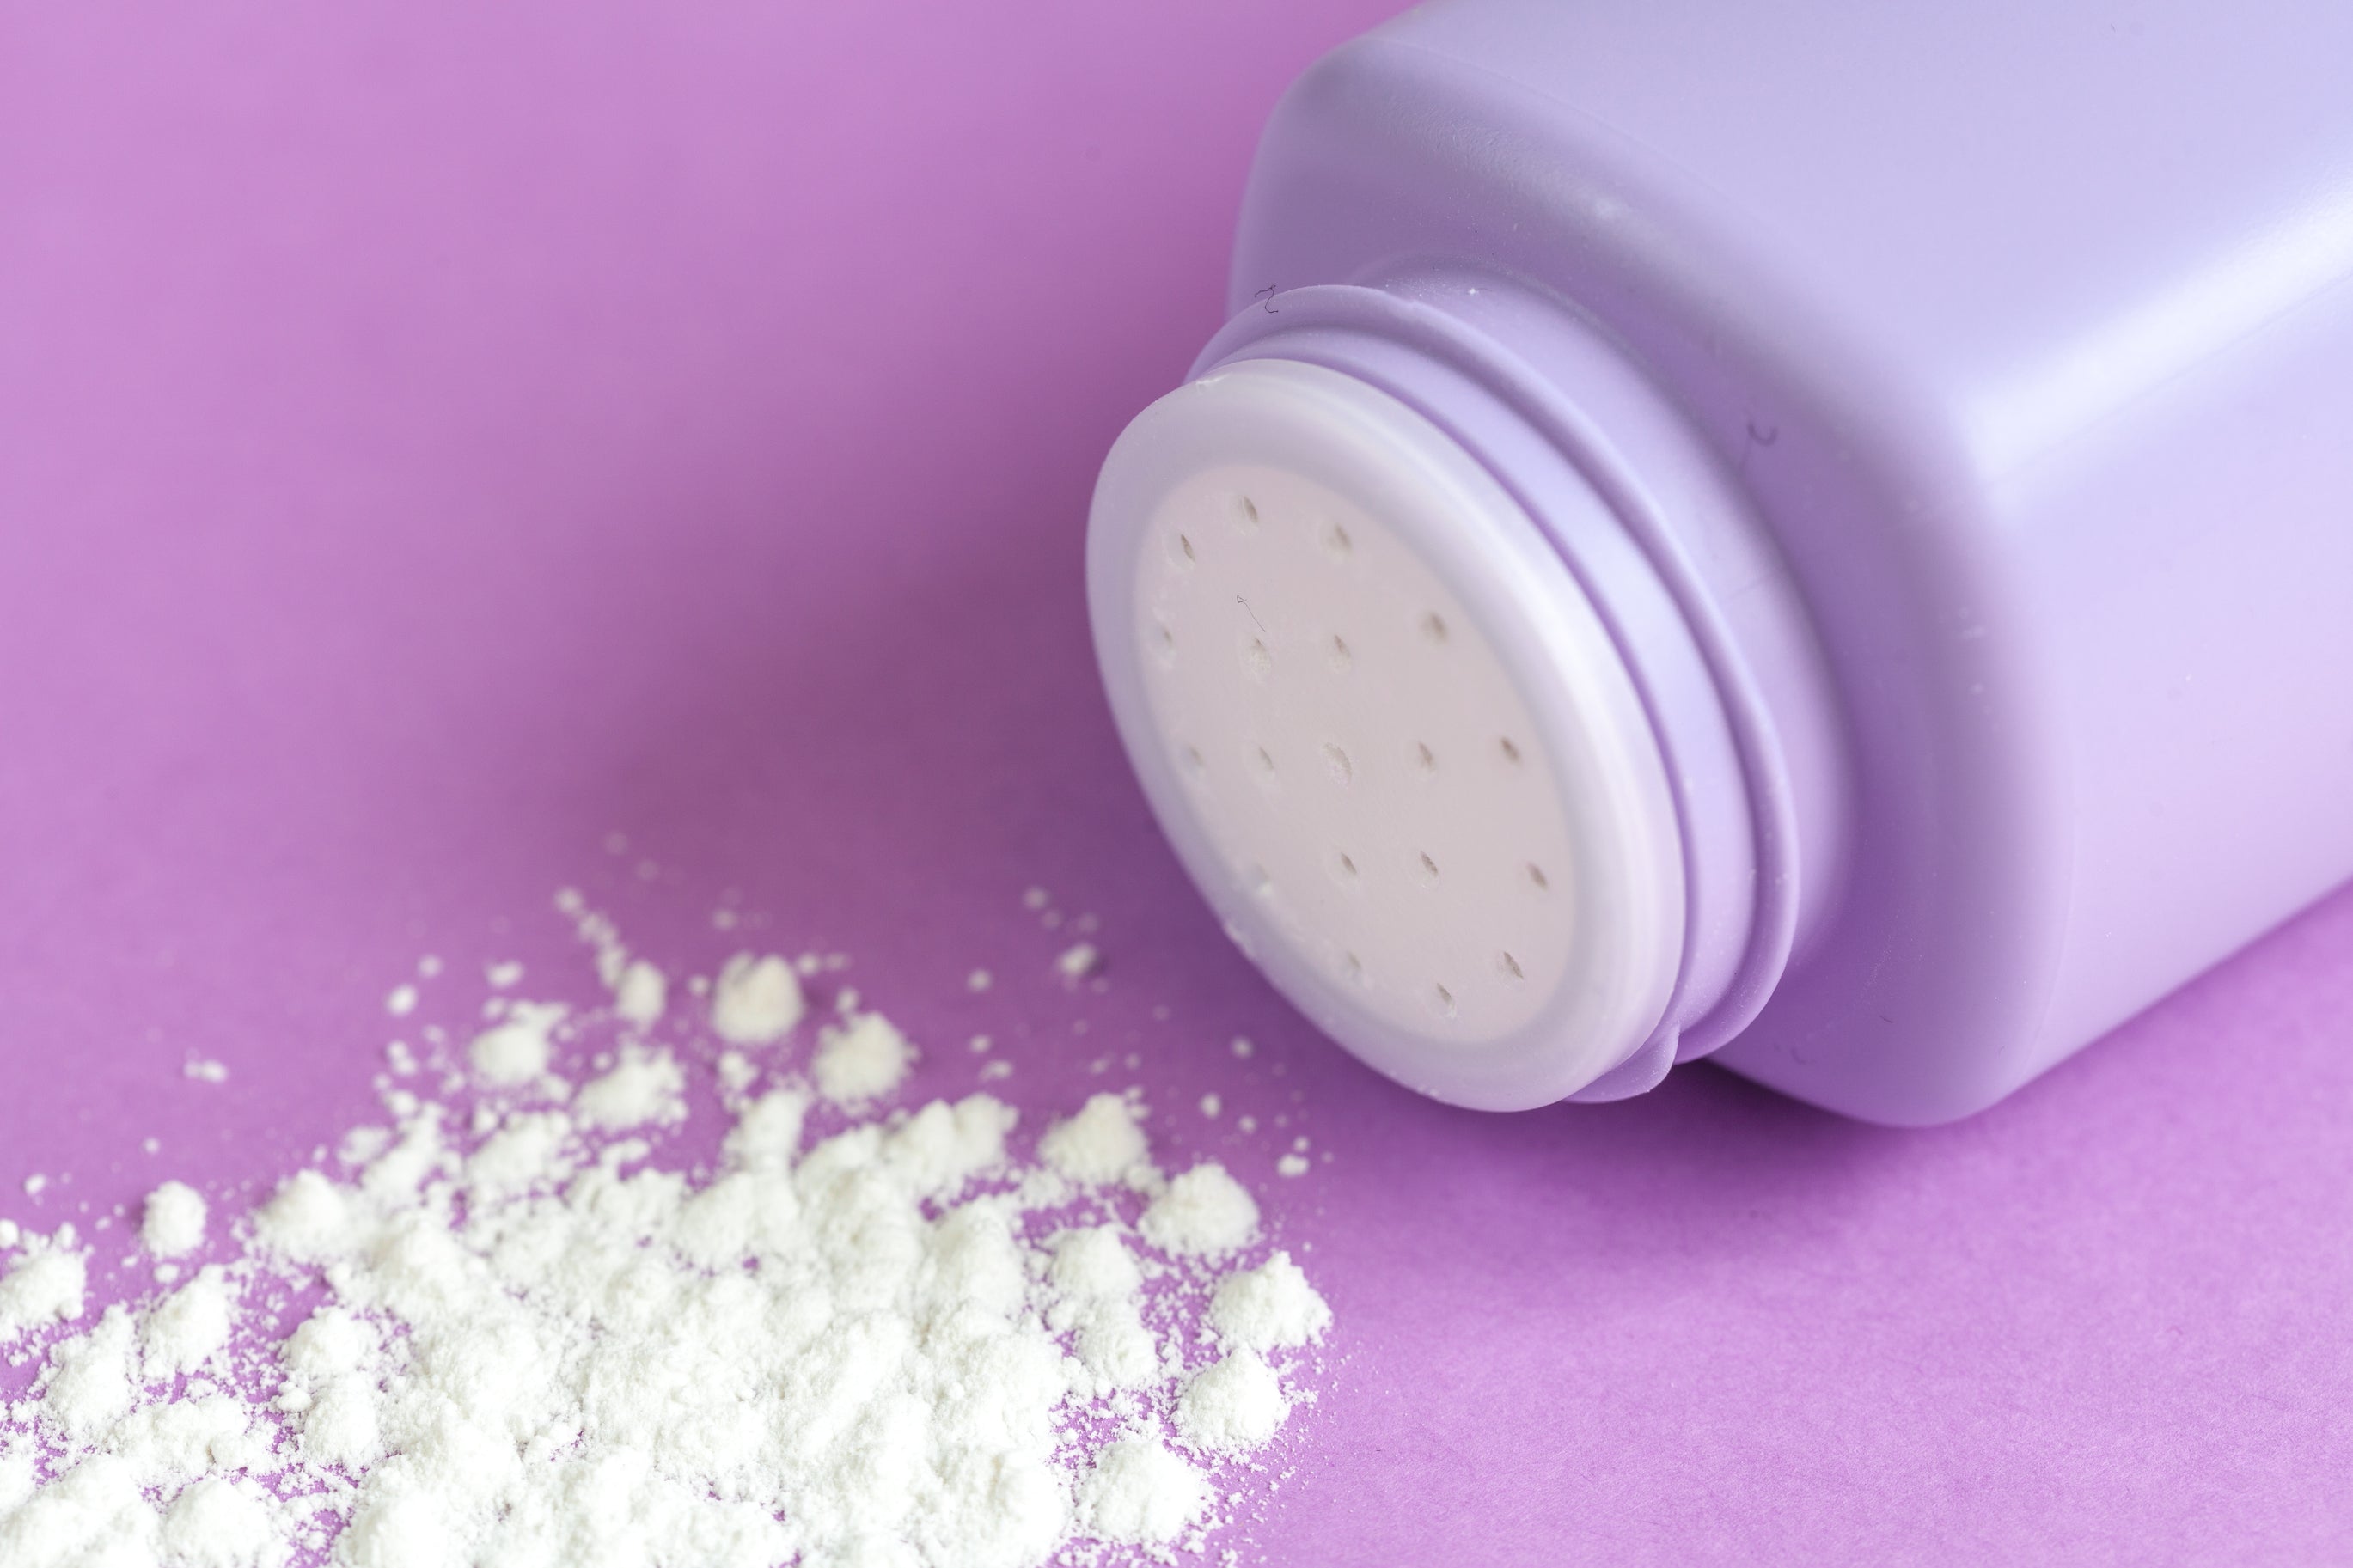 Talcum powder bottle against a lavender background. Baby talcum powder, talc, talc-free, asbestos, cancer.